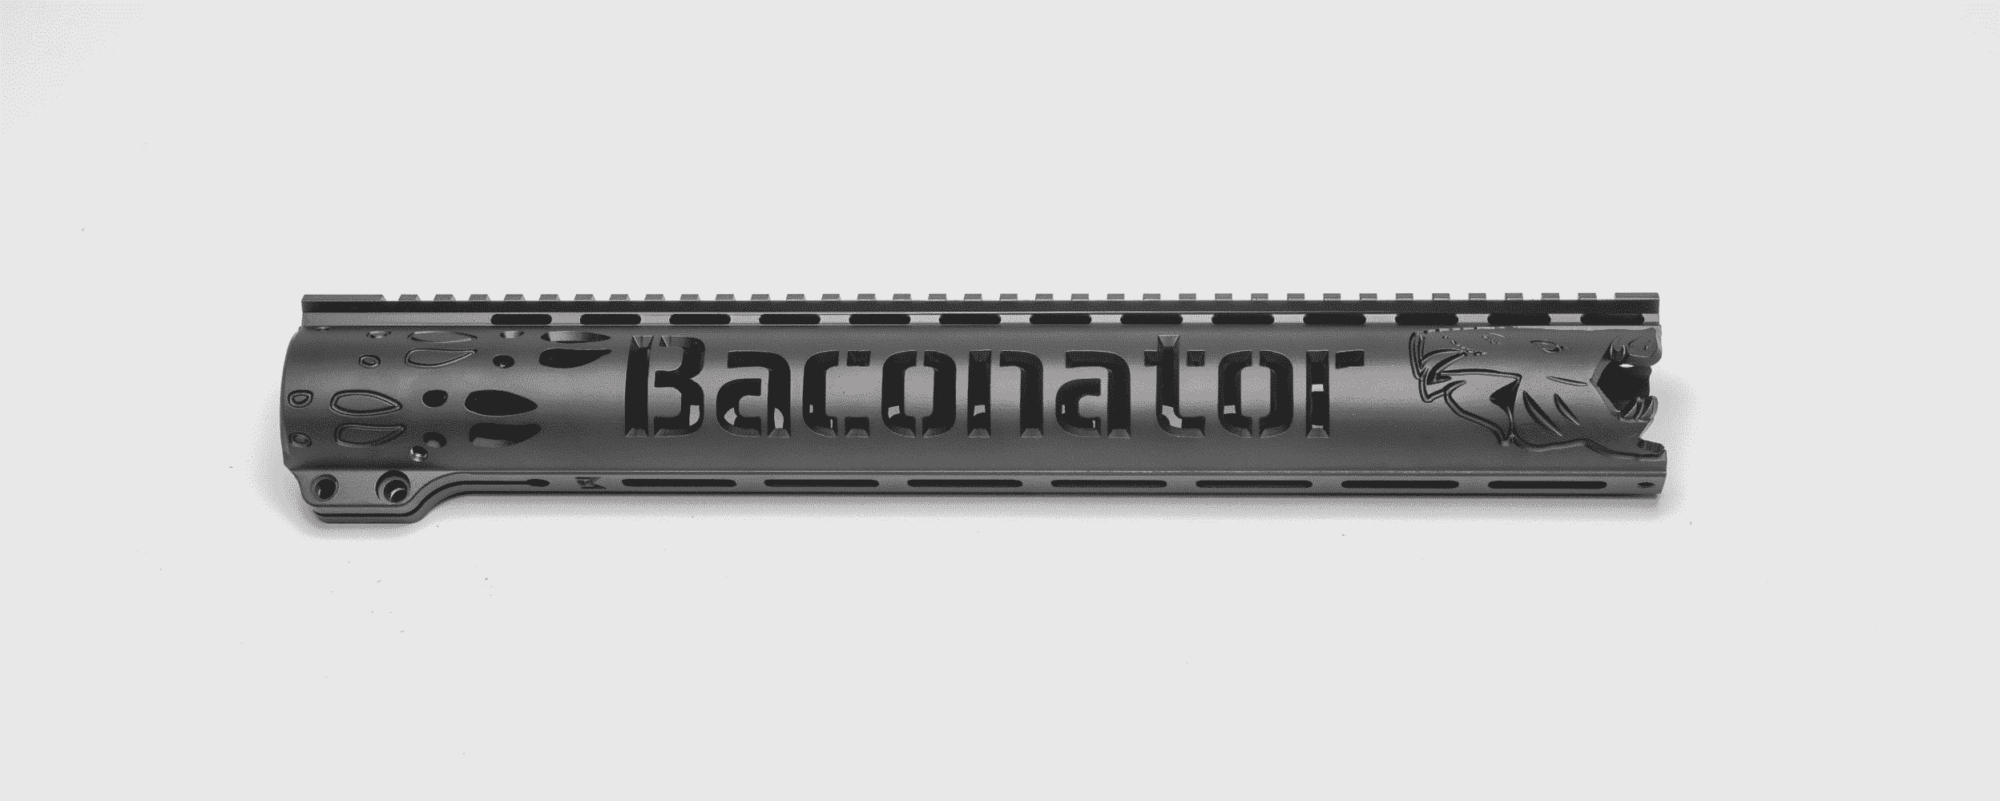 Unique AR's Slim Baconator 15